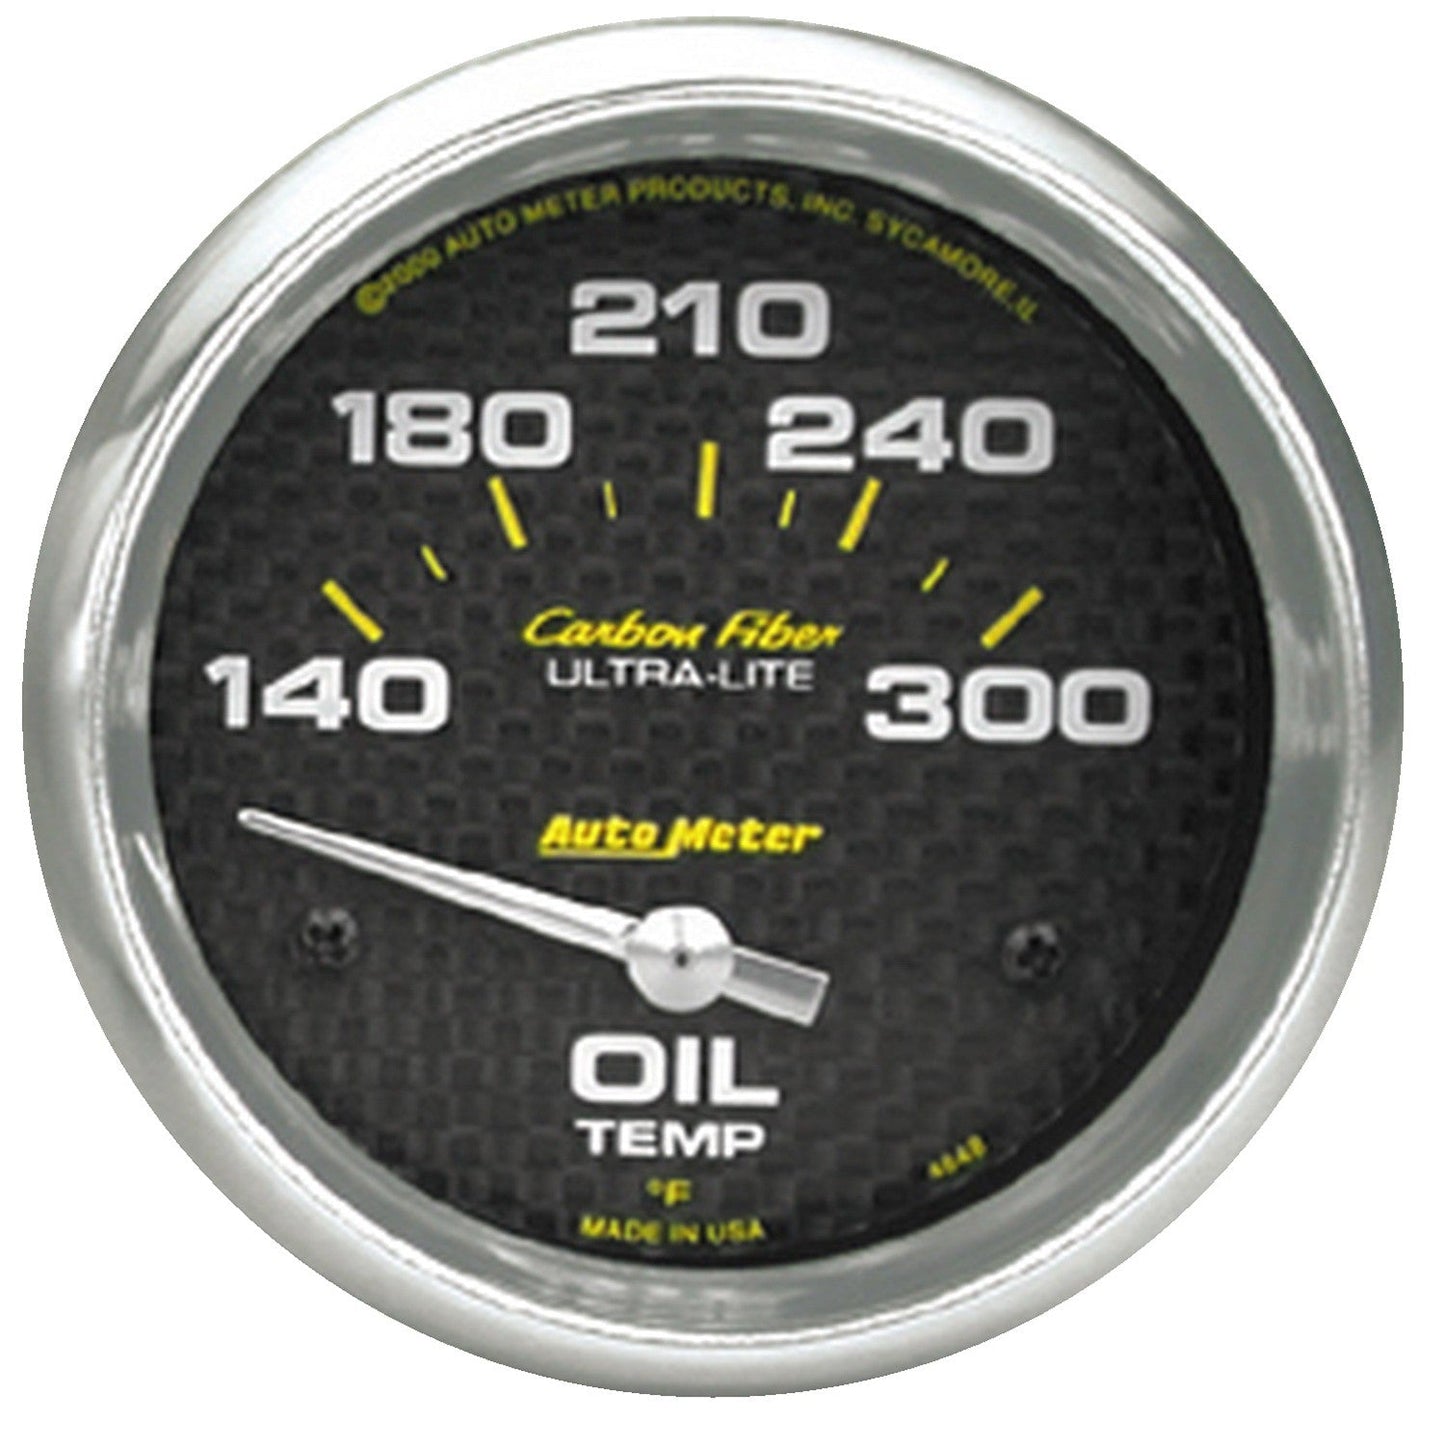 AutoMeter - 2-5/8" OIL TEMPERATURE, 140-300 °F, AIR-CORE, CARBON FIBER (4848)